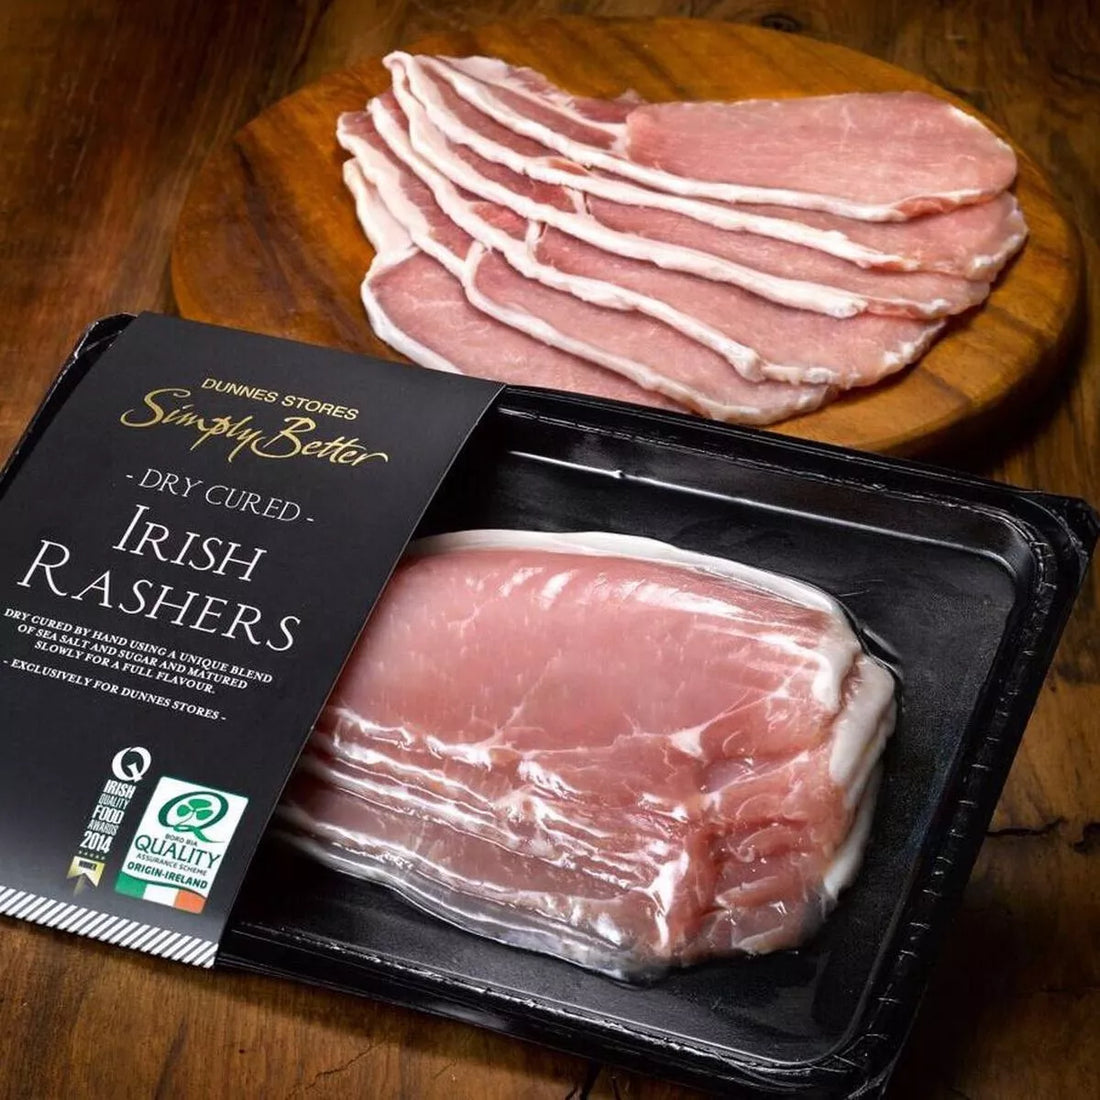 Irish bacon in packaging.